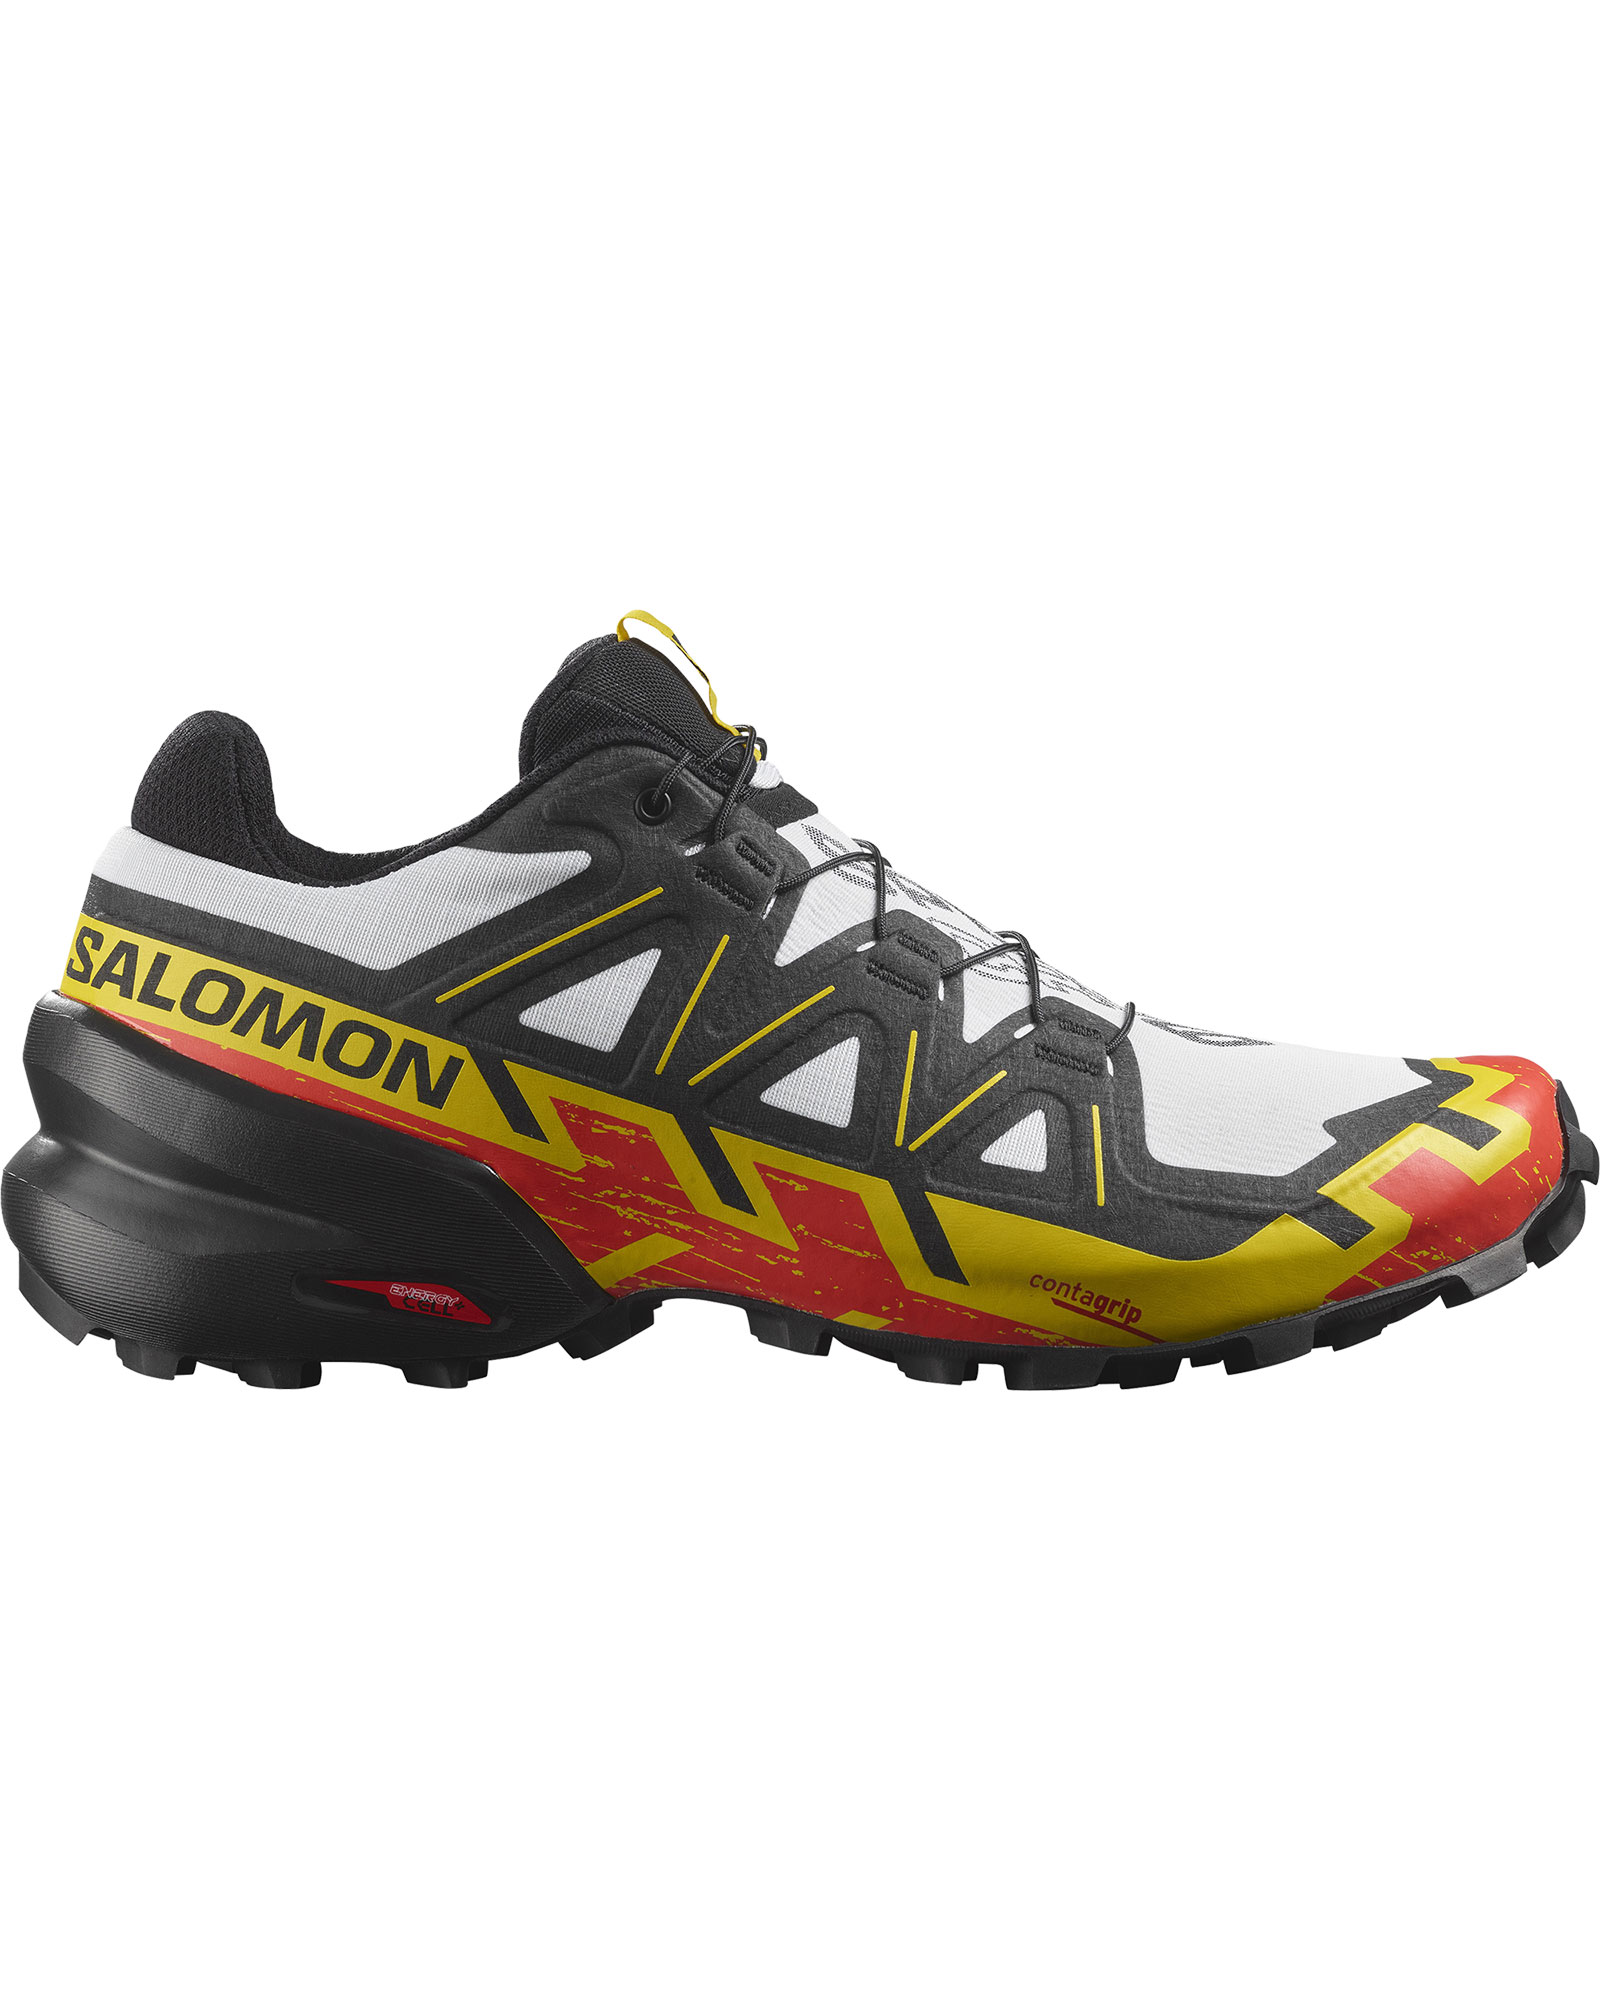 Salomon Speedcross 6 Men’s Shoes - White/Black/Empire Yellow UK 9.5